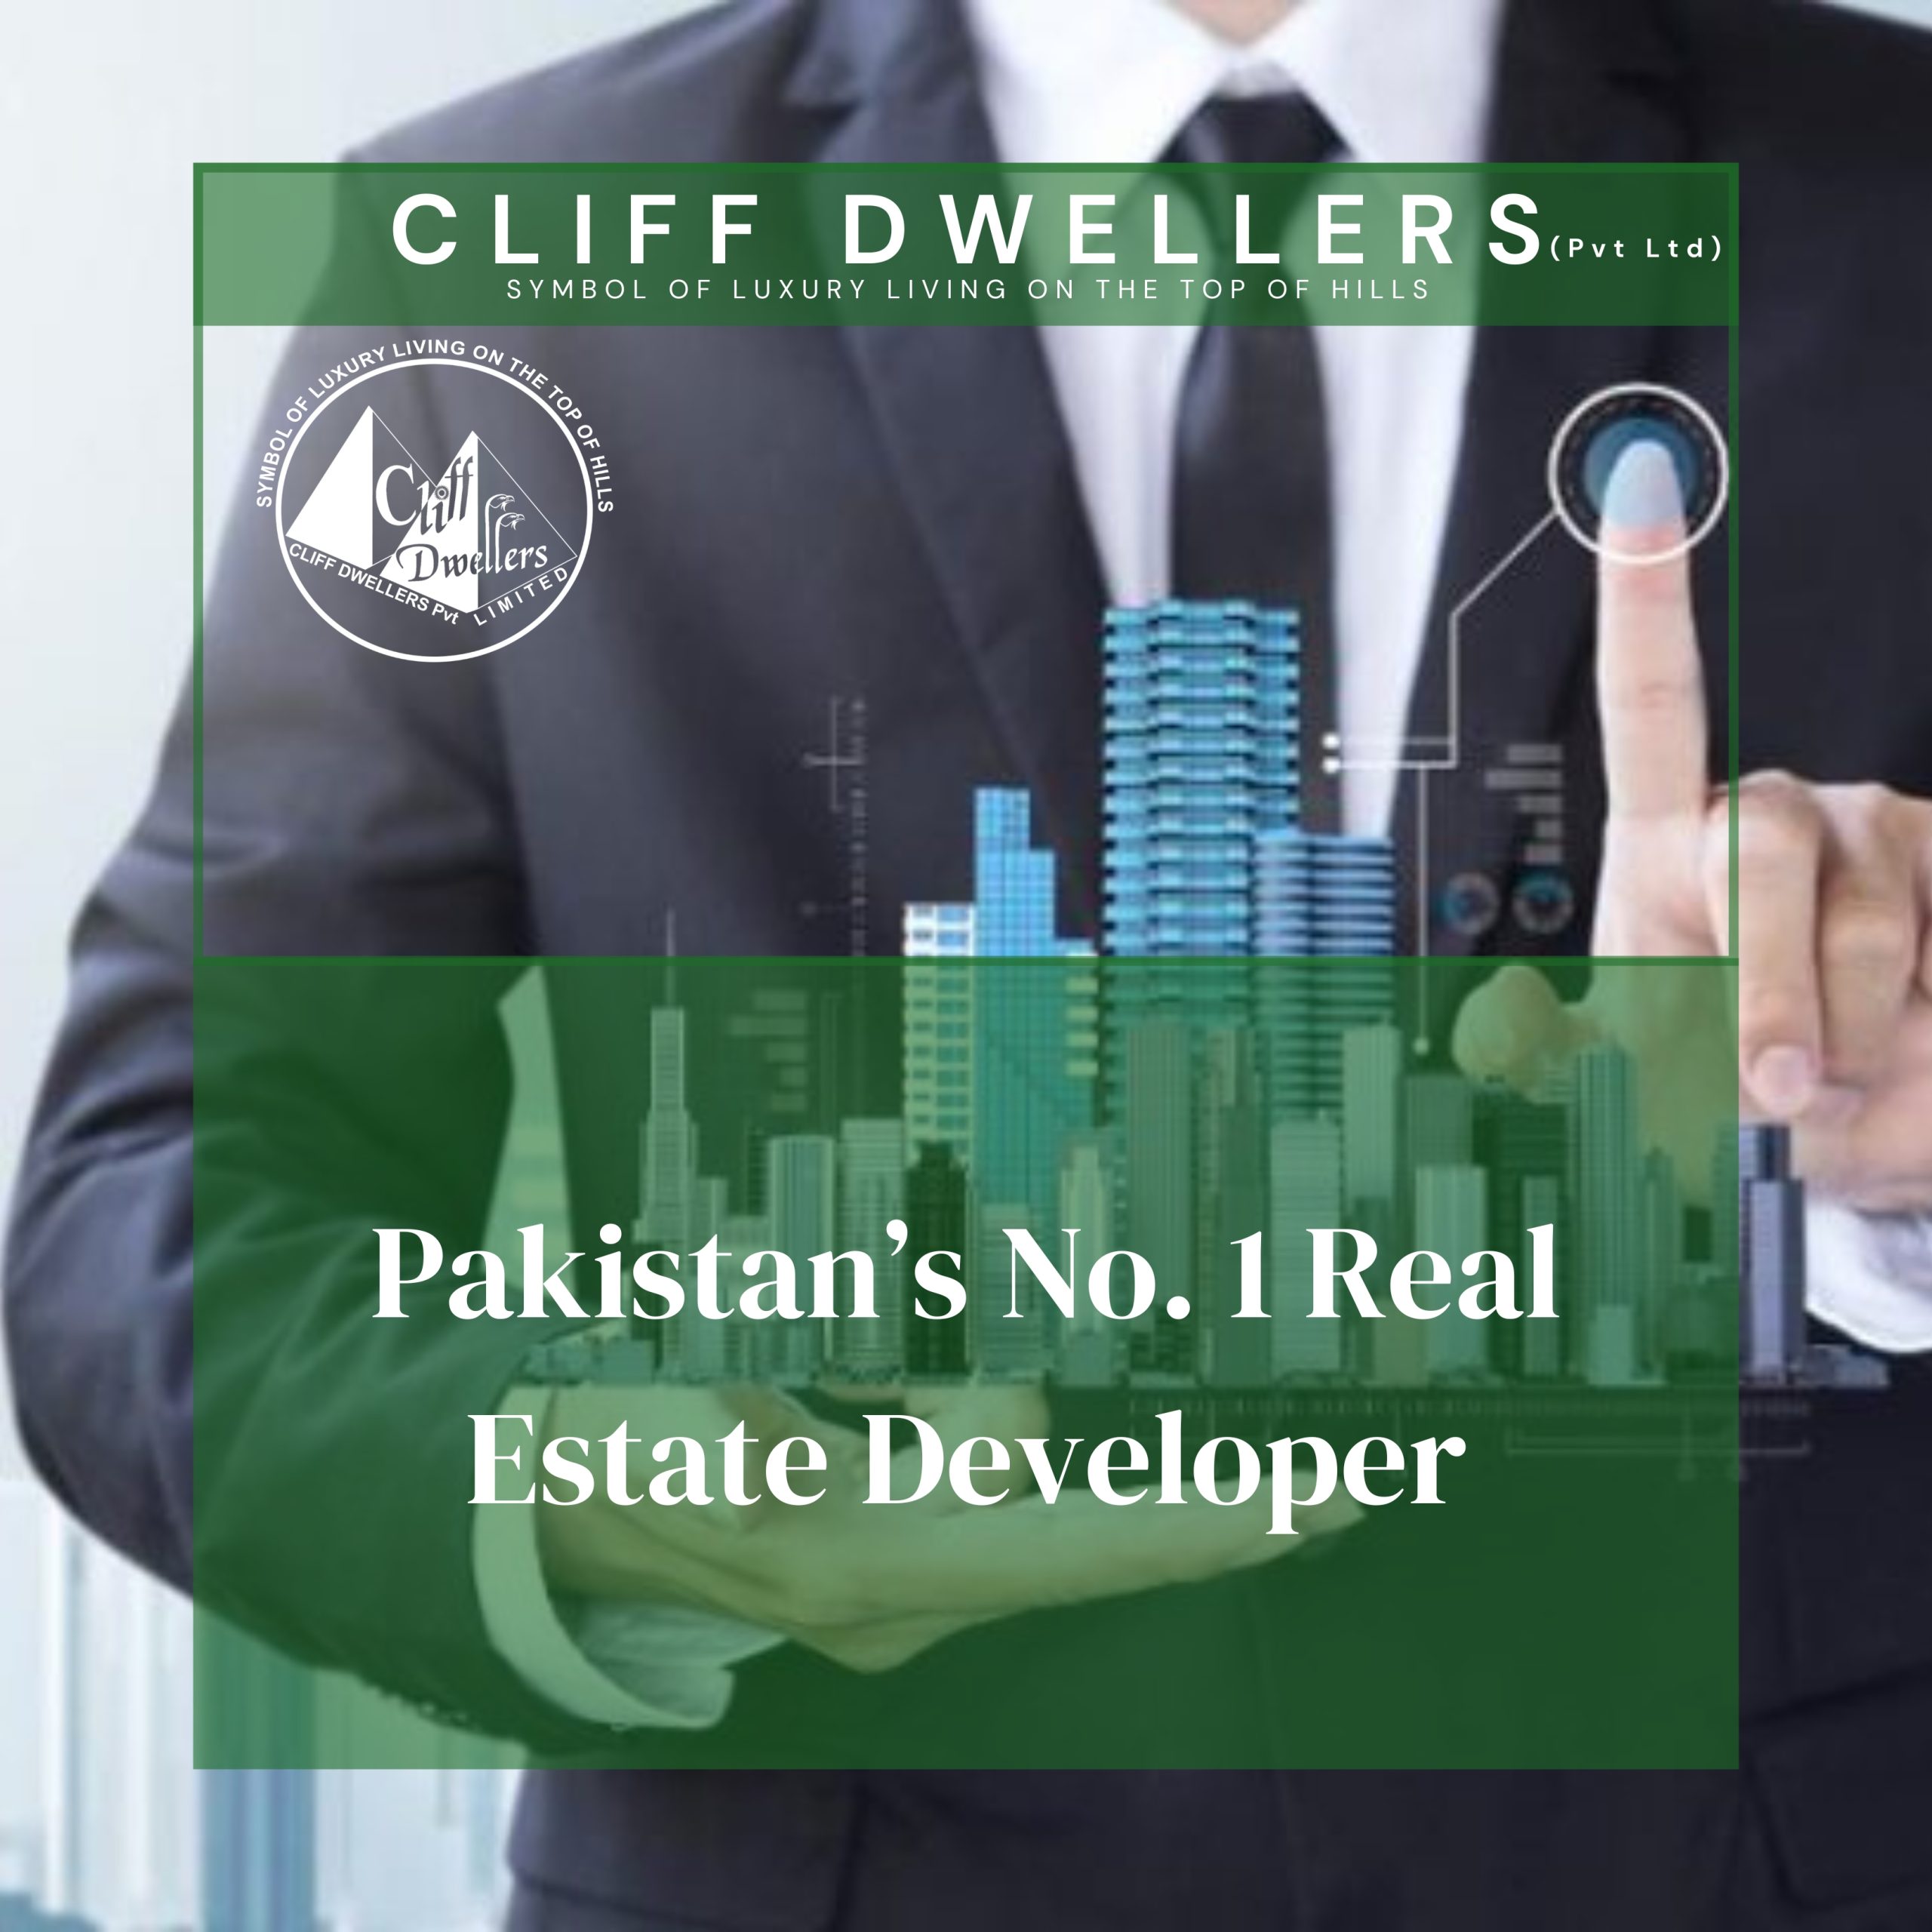 Cliff Dwellers- Pakistan’s No. 1 Real Estate Developer